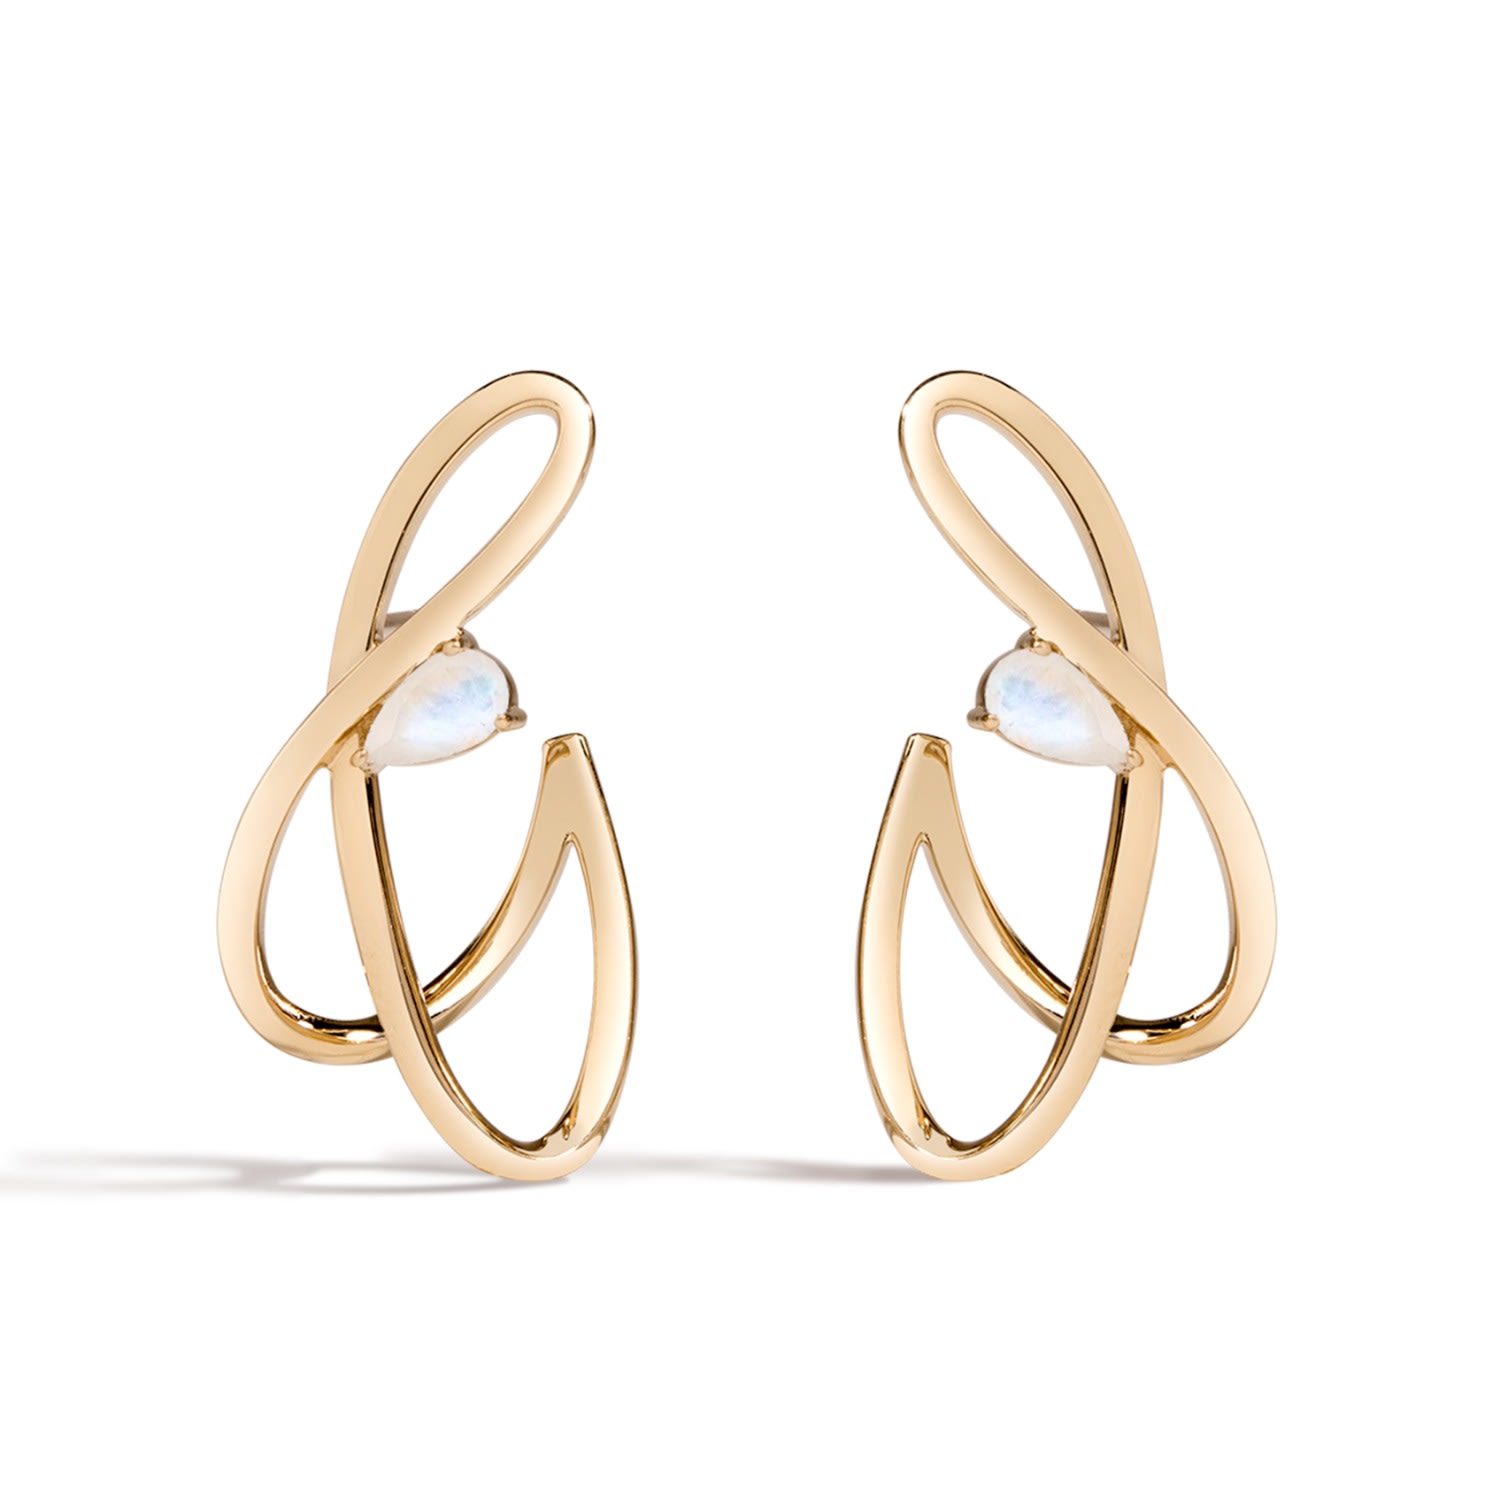 Women’s Beauty In The Bloom Earrings - Solid 14K Gold Stud & Huggie Statement Earrings With 0.65 Carat Pear Moonstones Lúdere